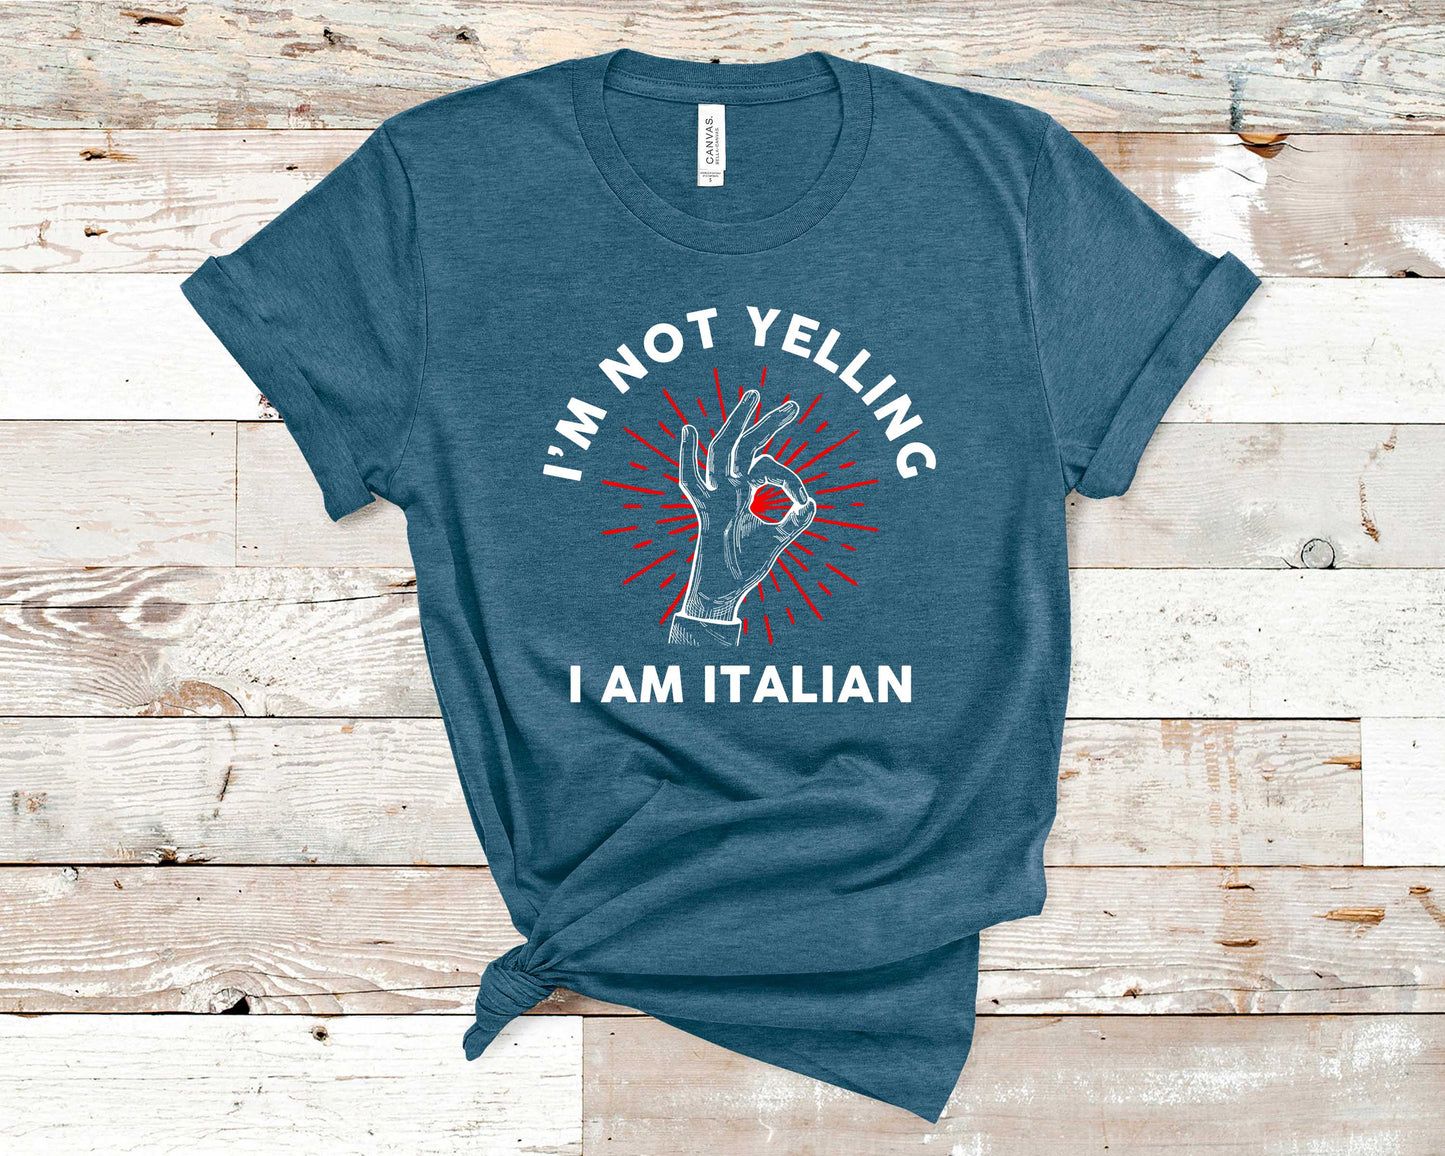 I'm Not Yelling I'm Italian - Travel/Vacation